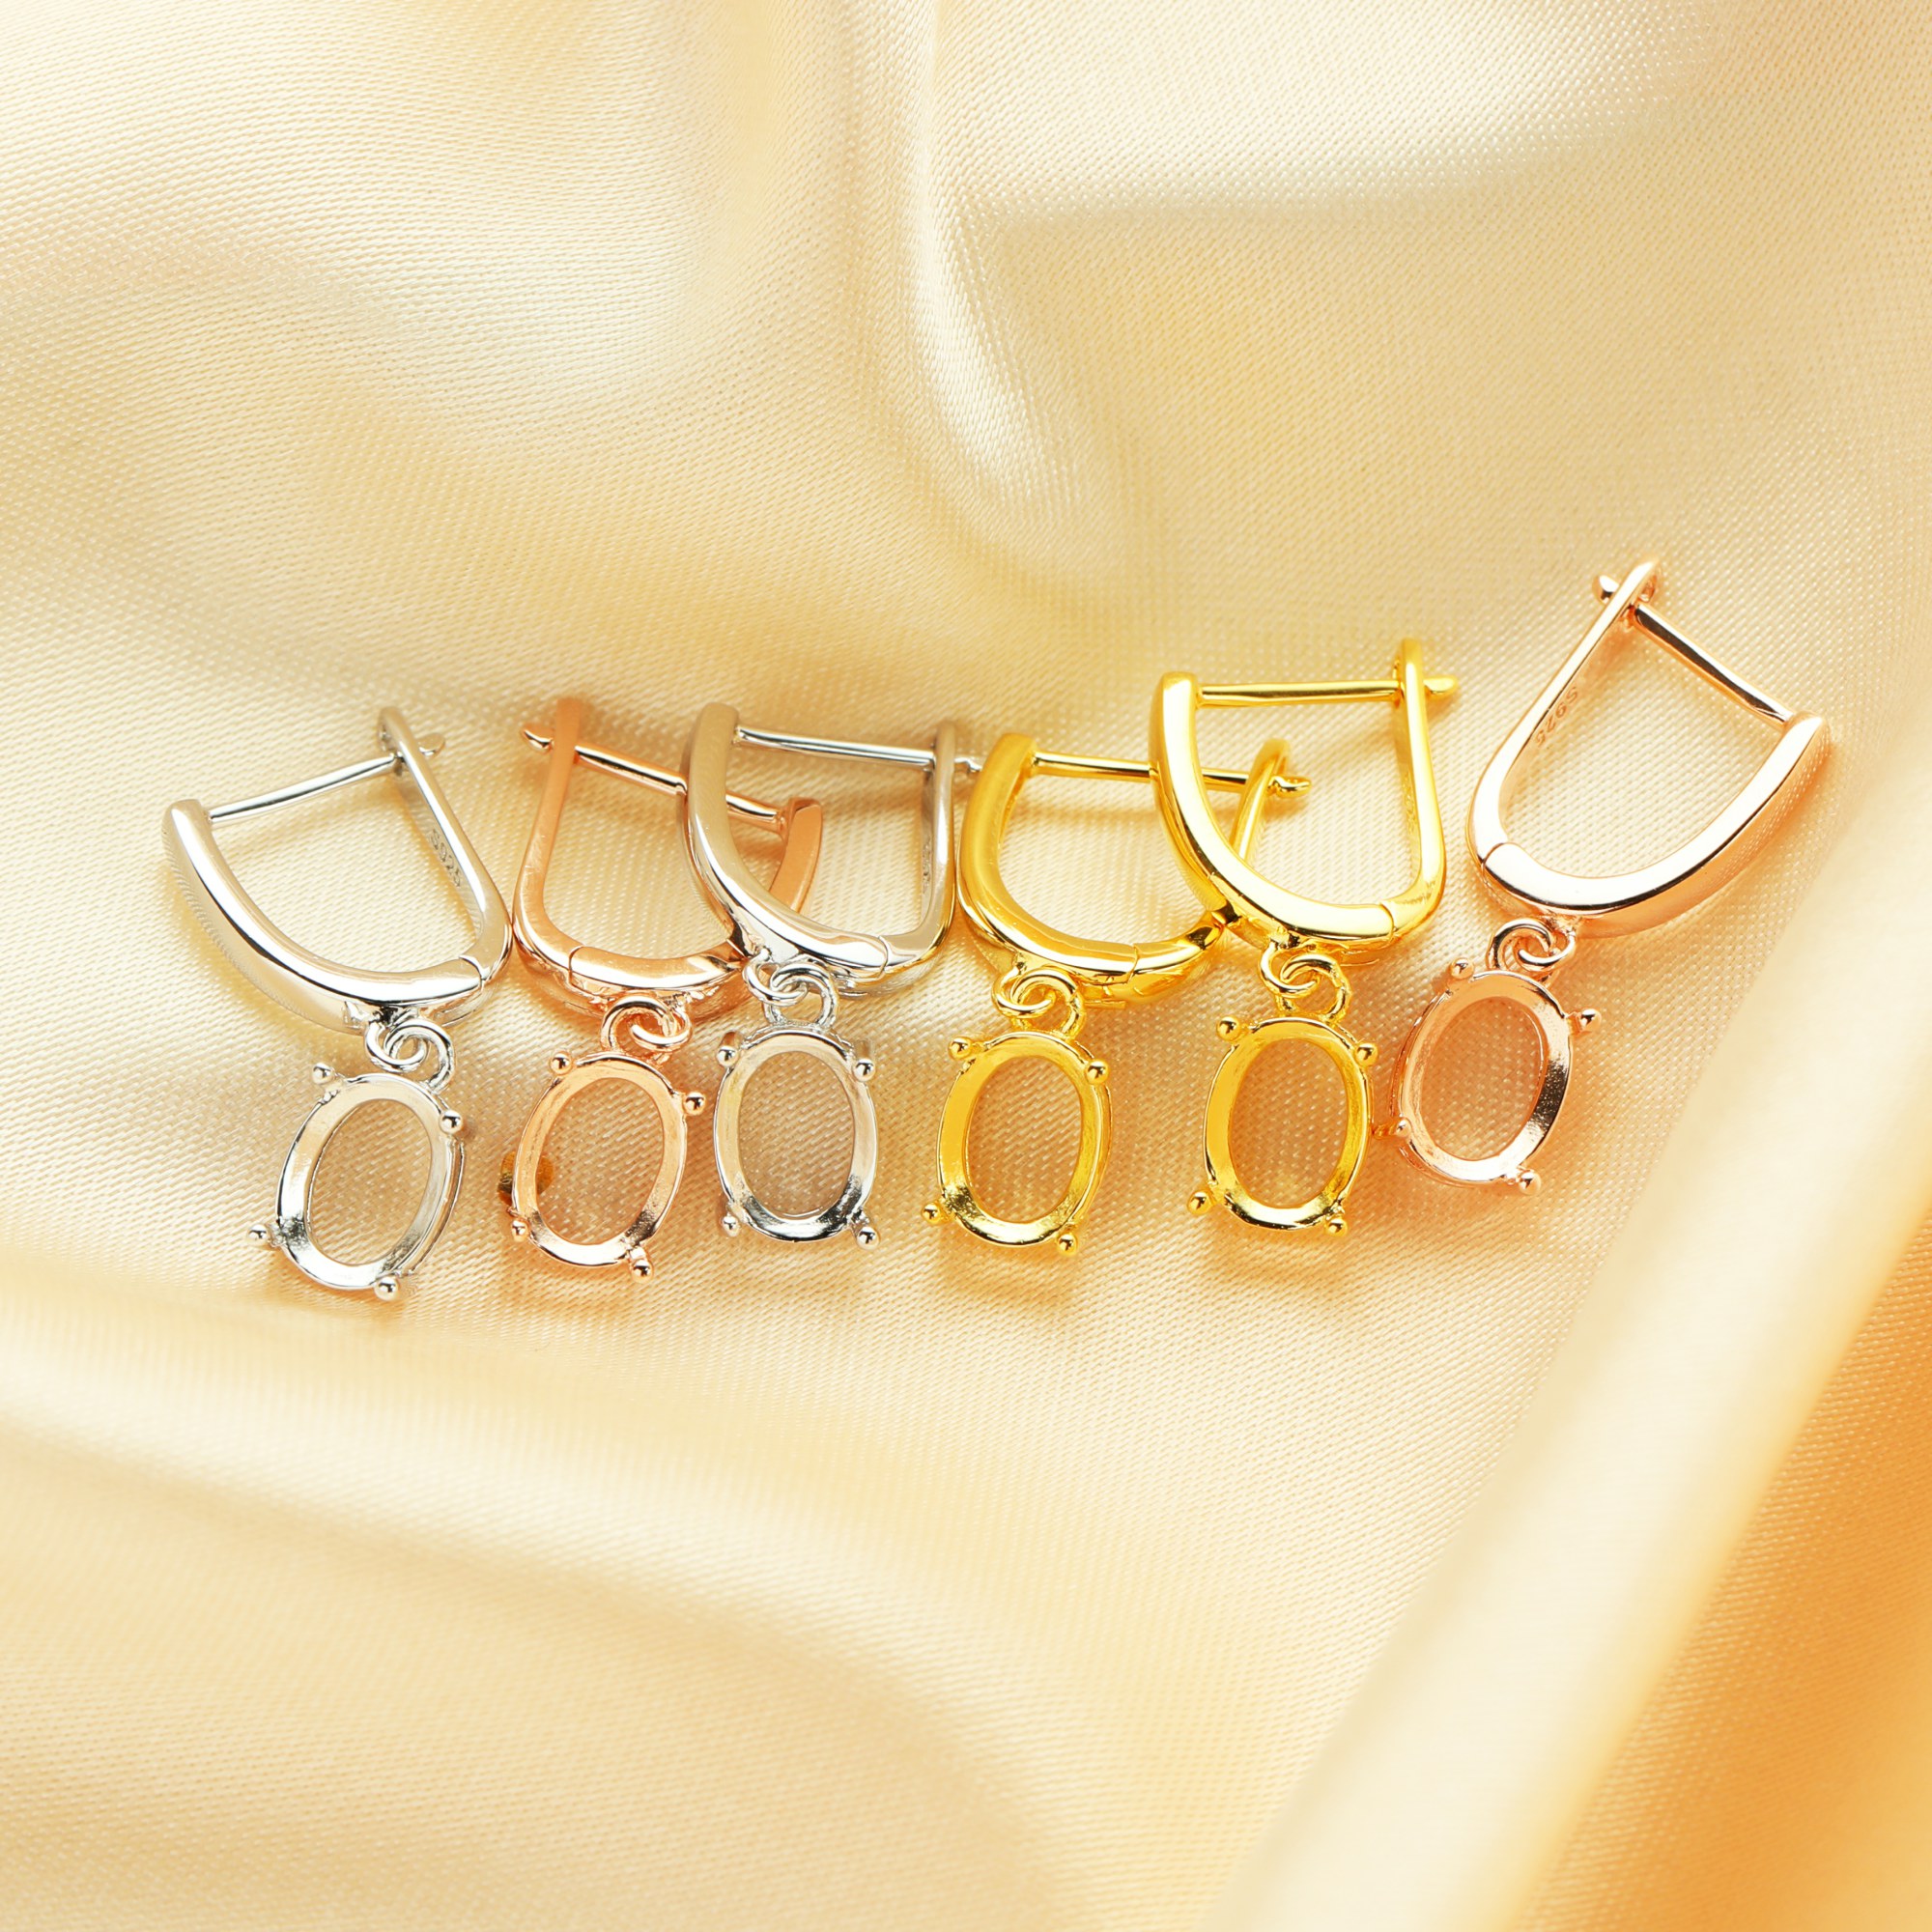 6x8MM Oval Prongs Hoop Earrings Settings,Solid 925 Sterling Silver Rose Gold Plated Earrings,Simple Earrings,DIY Earring Supplies 1706136 - Click Image to Close